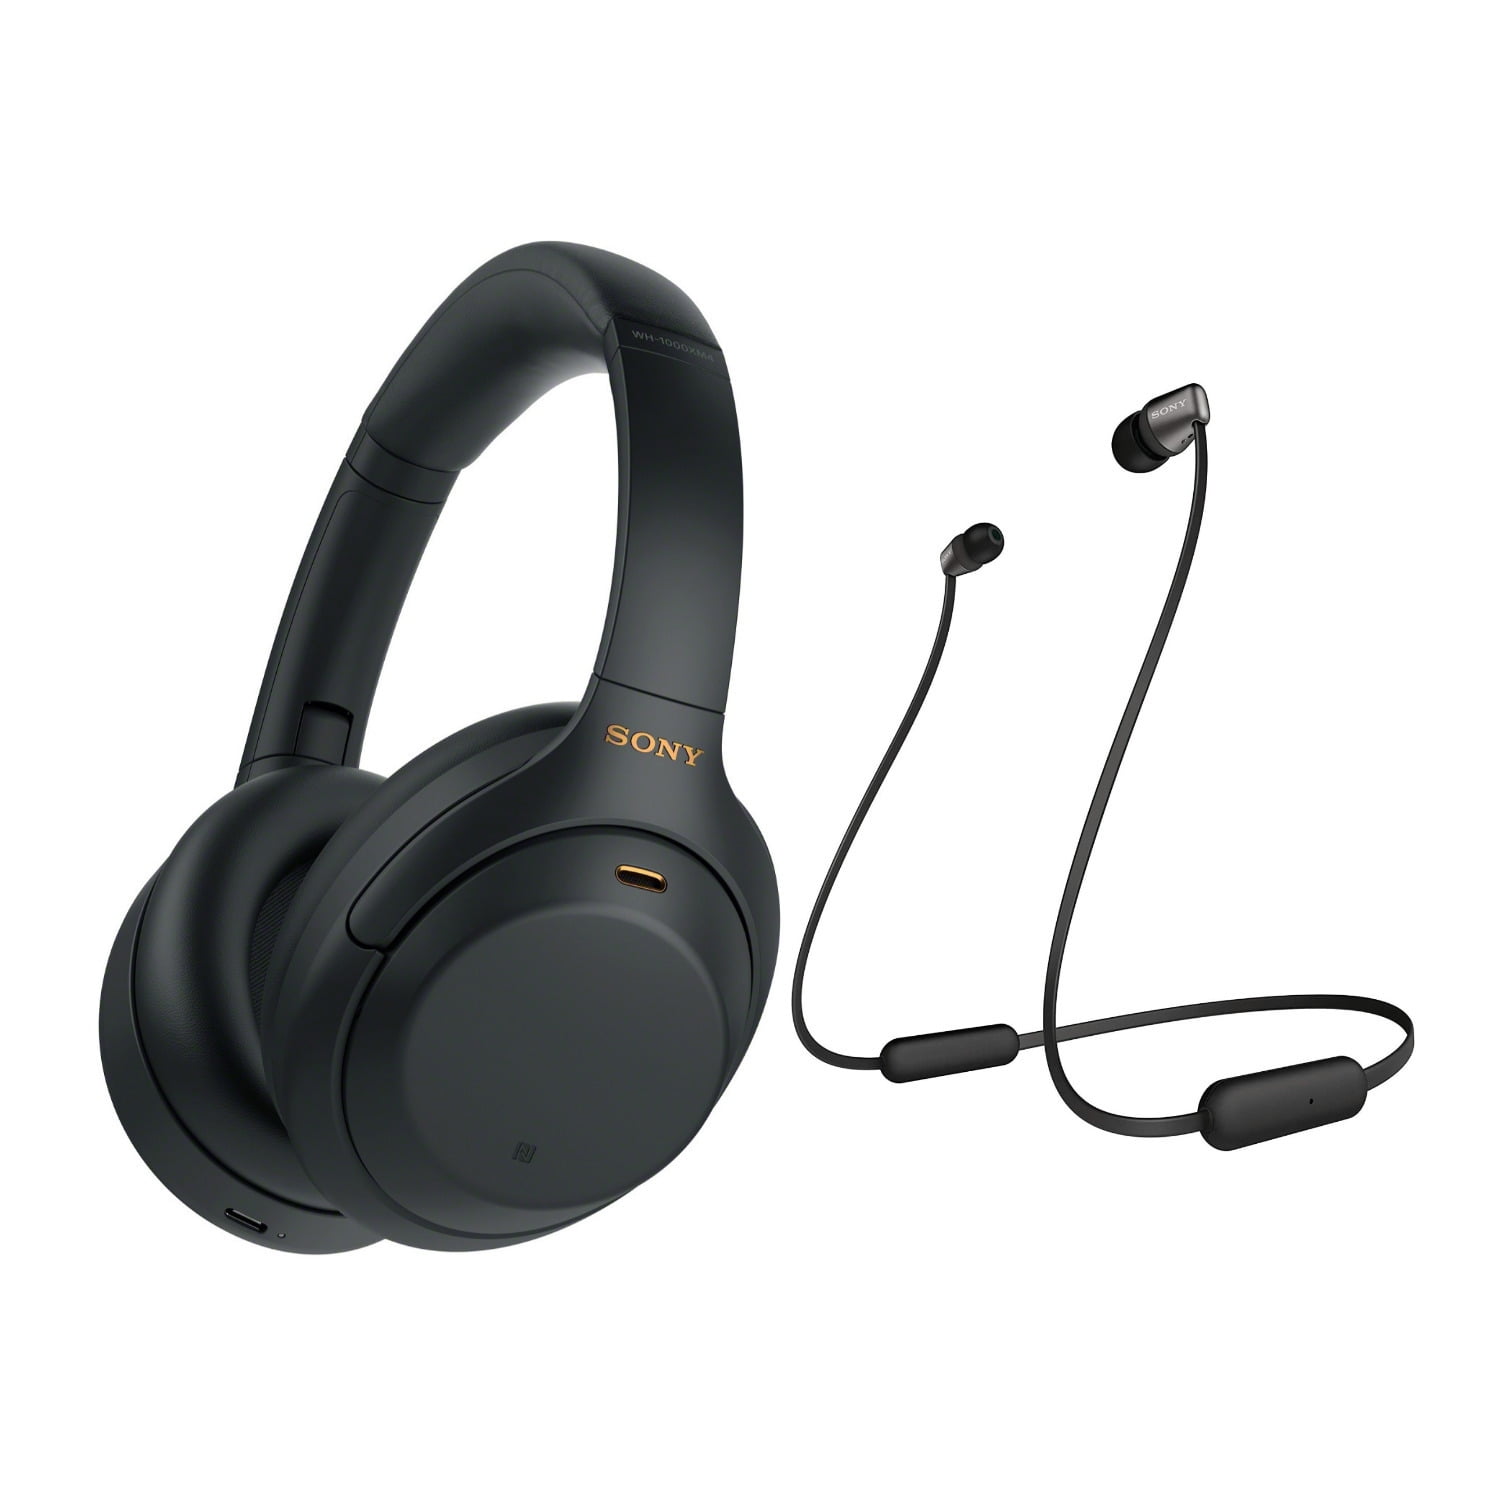 Sony WH-1000XM4 Wireless Noise Canceling Over-Ear Headphones (Black) Bundle 